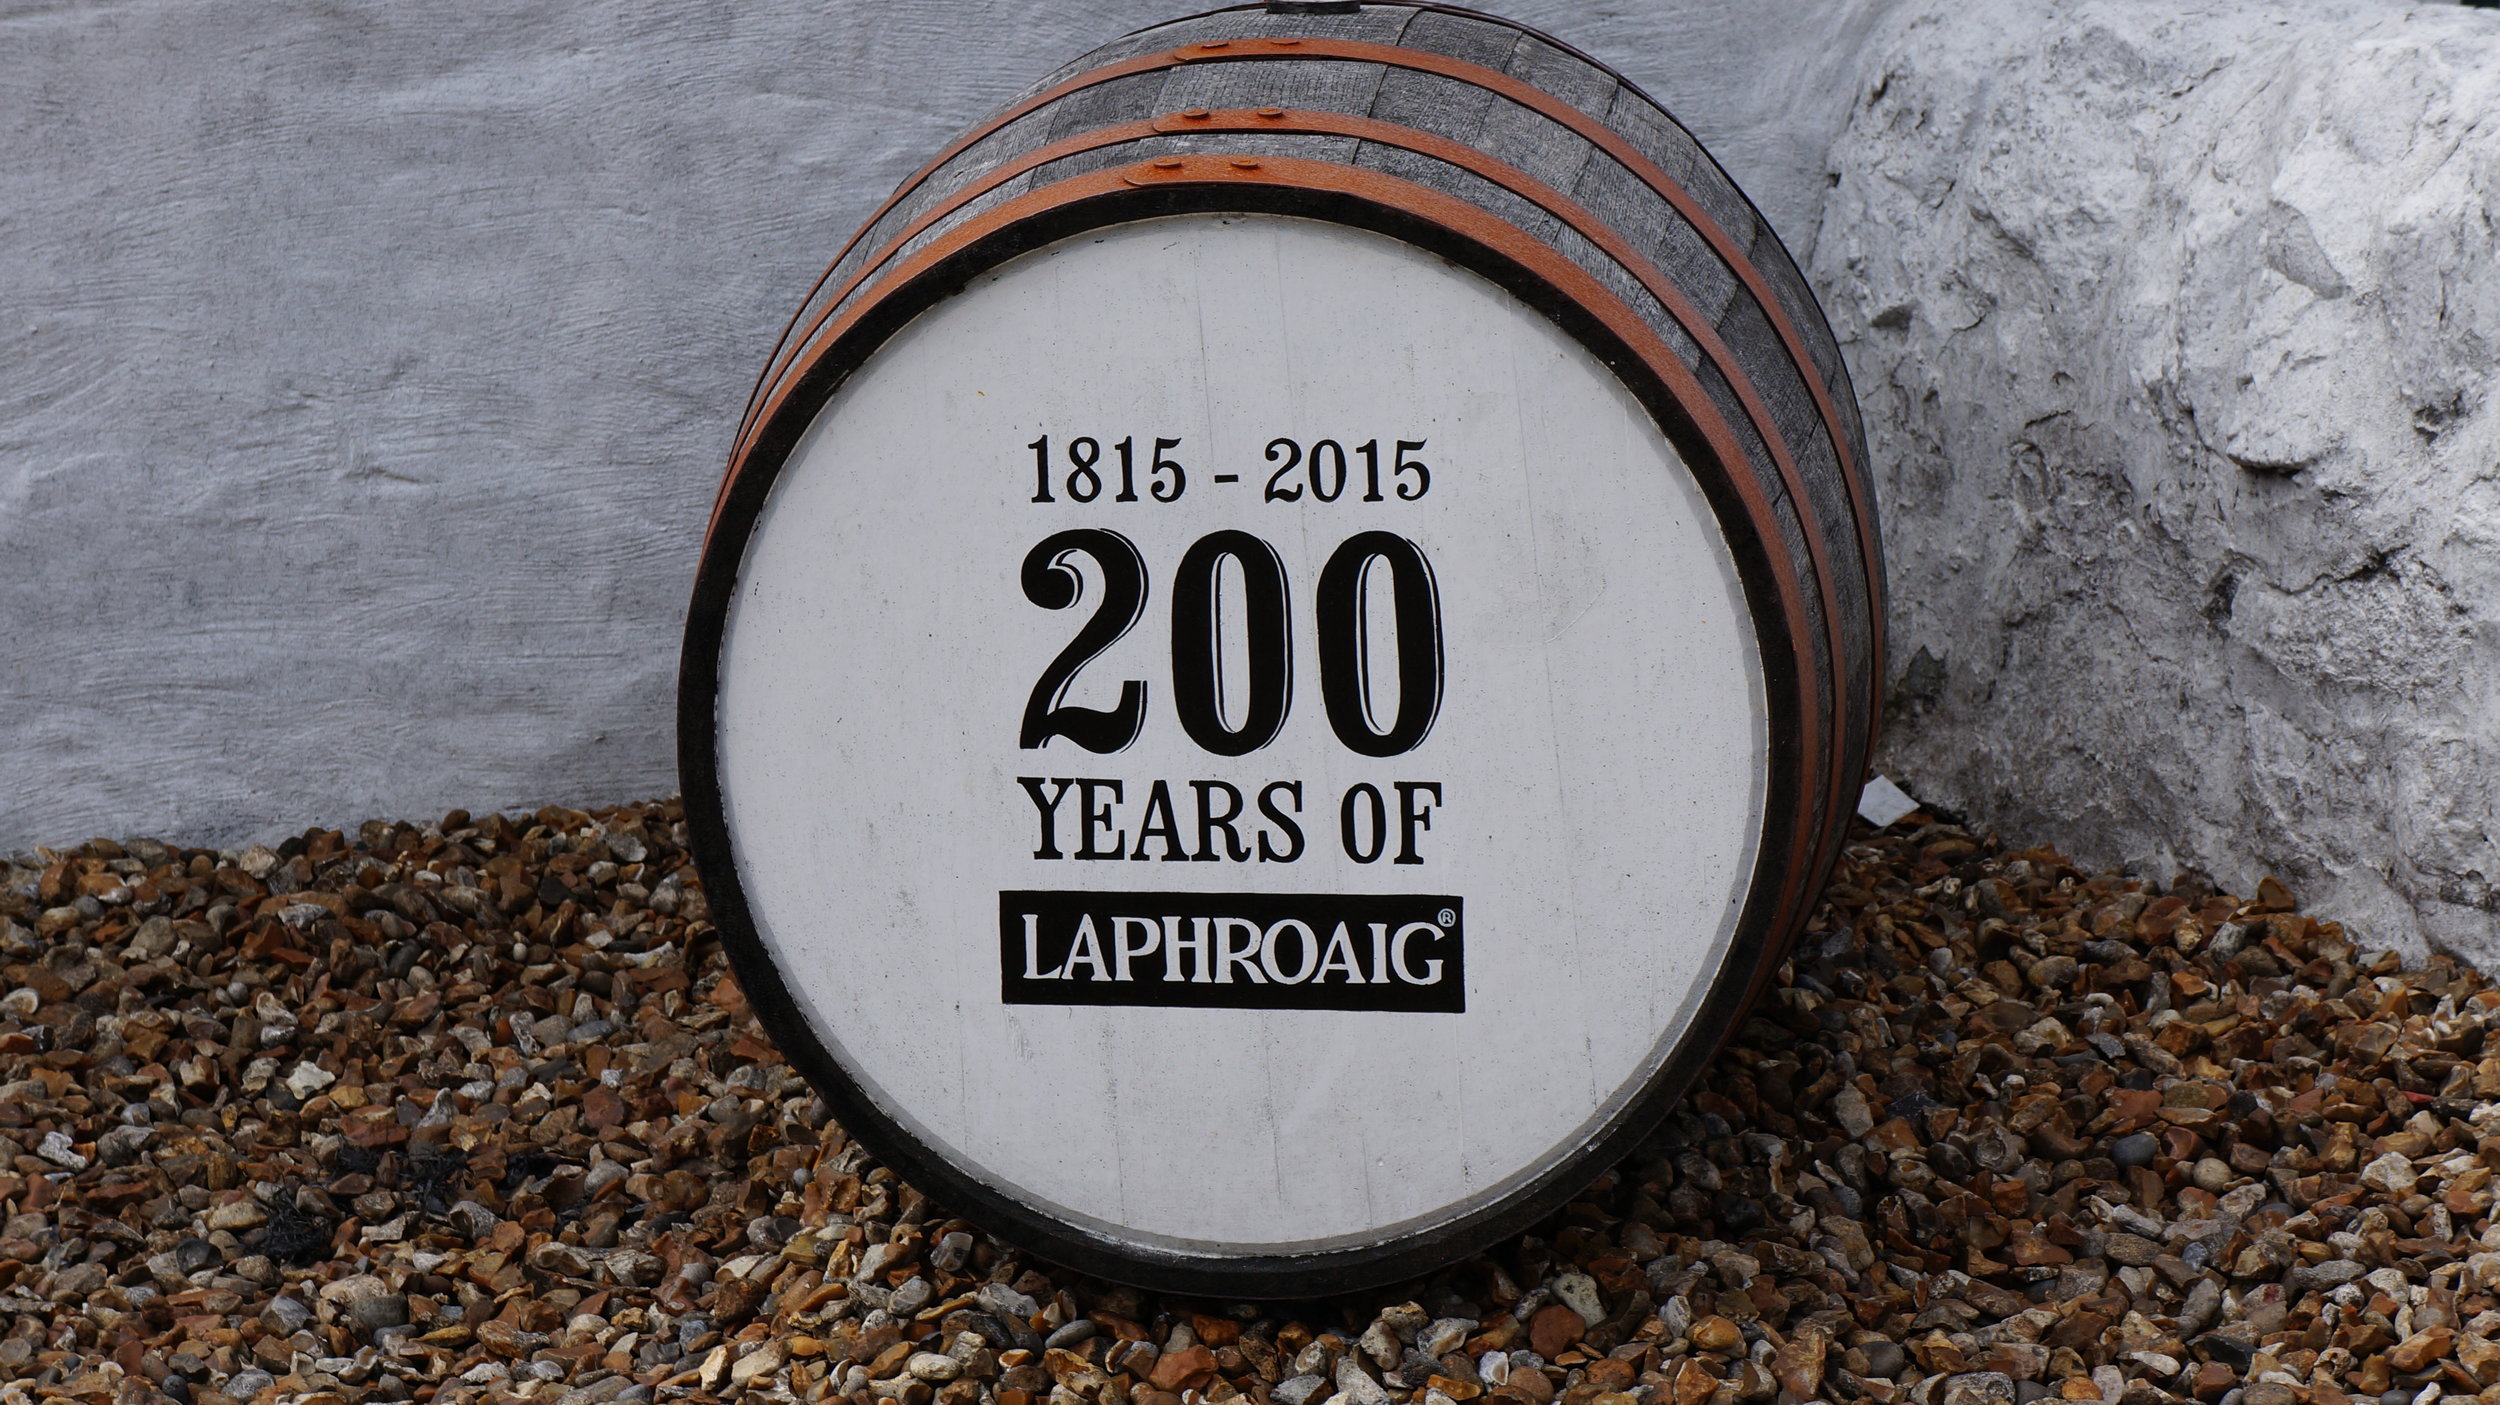 Laphroaig 200 Years